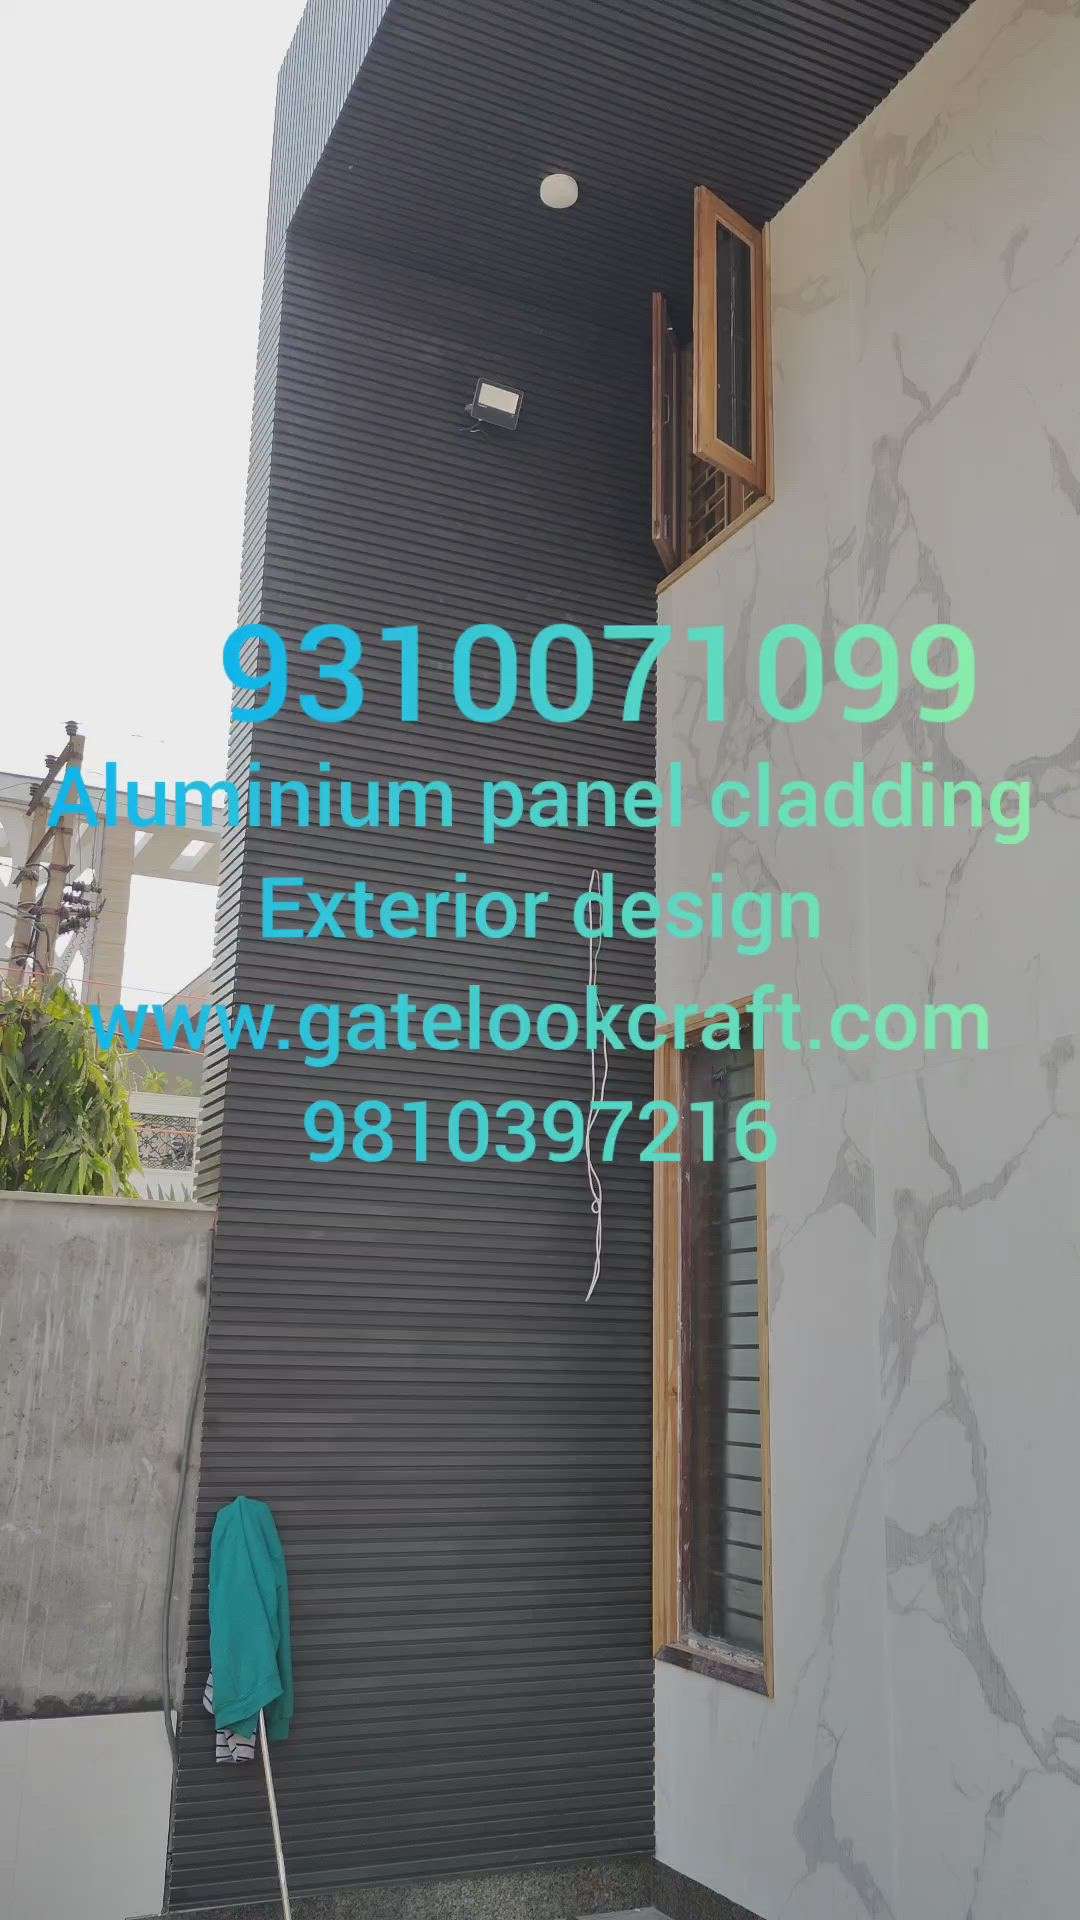 Aluminium profile gates & cladding exterior design by Hibza sterling interiors pvt ltd  manufacture in Delhi Gurgaon Noida faridabad ghaziabad Soni pat bhadugadh NCR #aluminiumcladding #cladding #cladingsystem #exteriorclading #frontelevation #aluminiumprofilegate #maingates